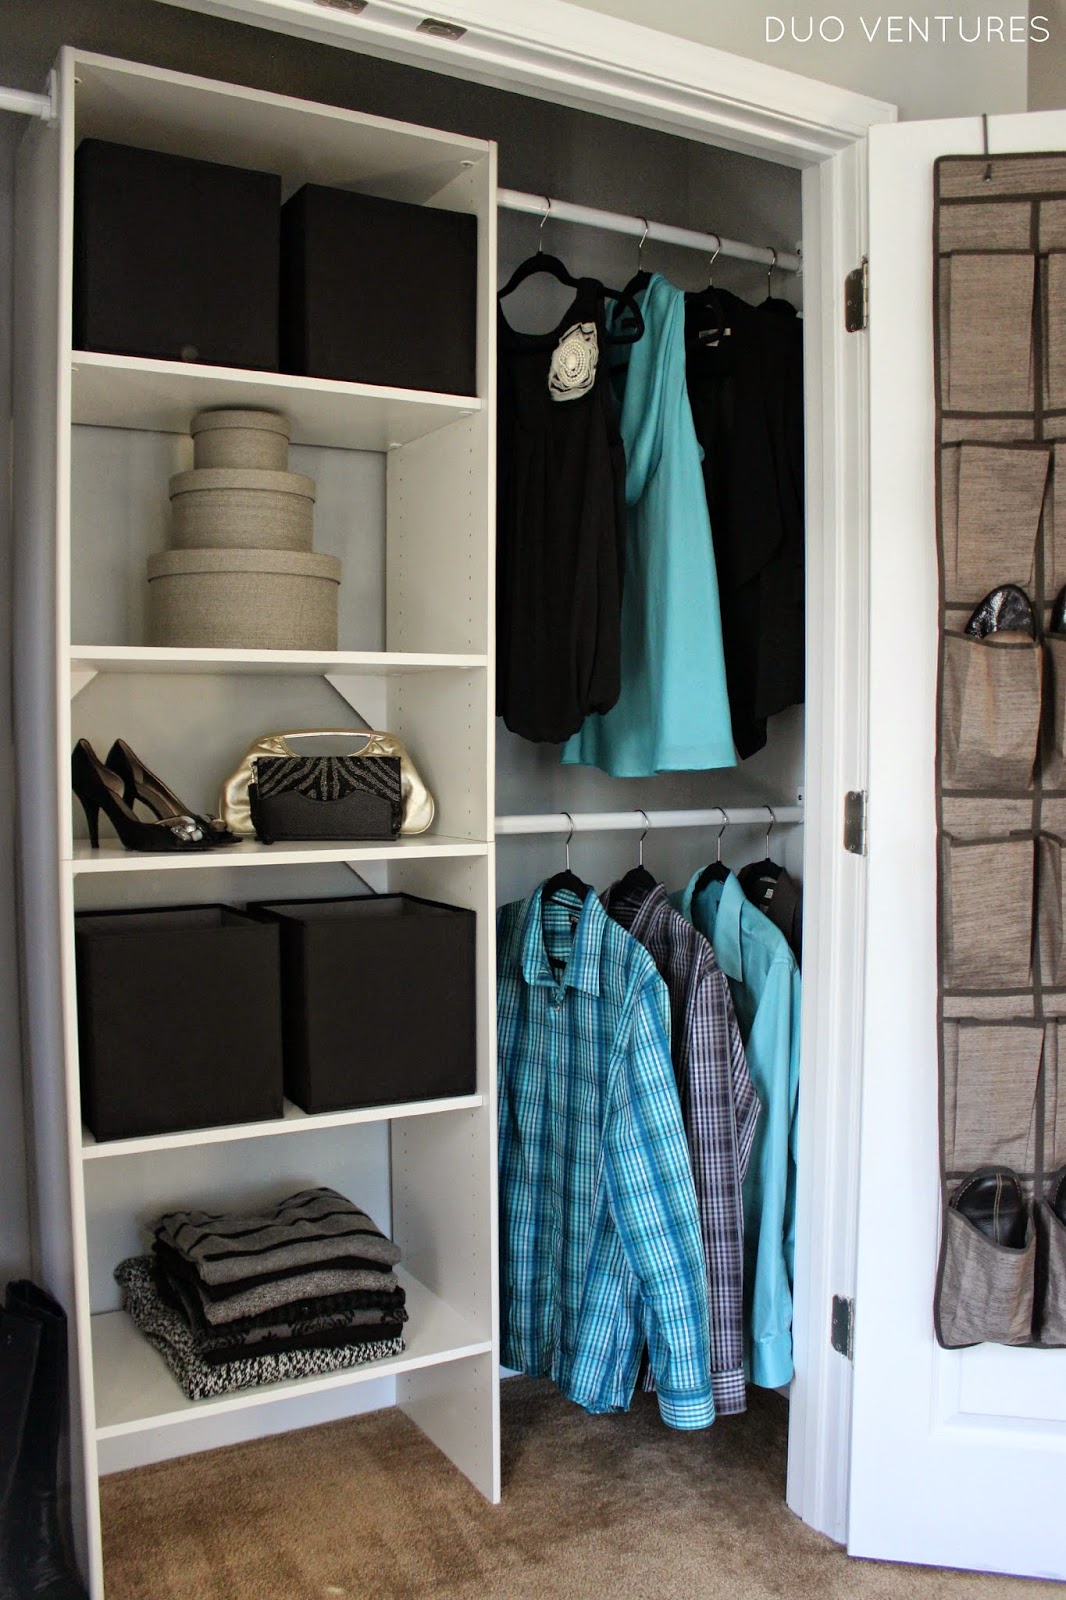 Duo Ventures: Guest Bedroom: Closet Organizer Install